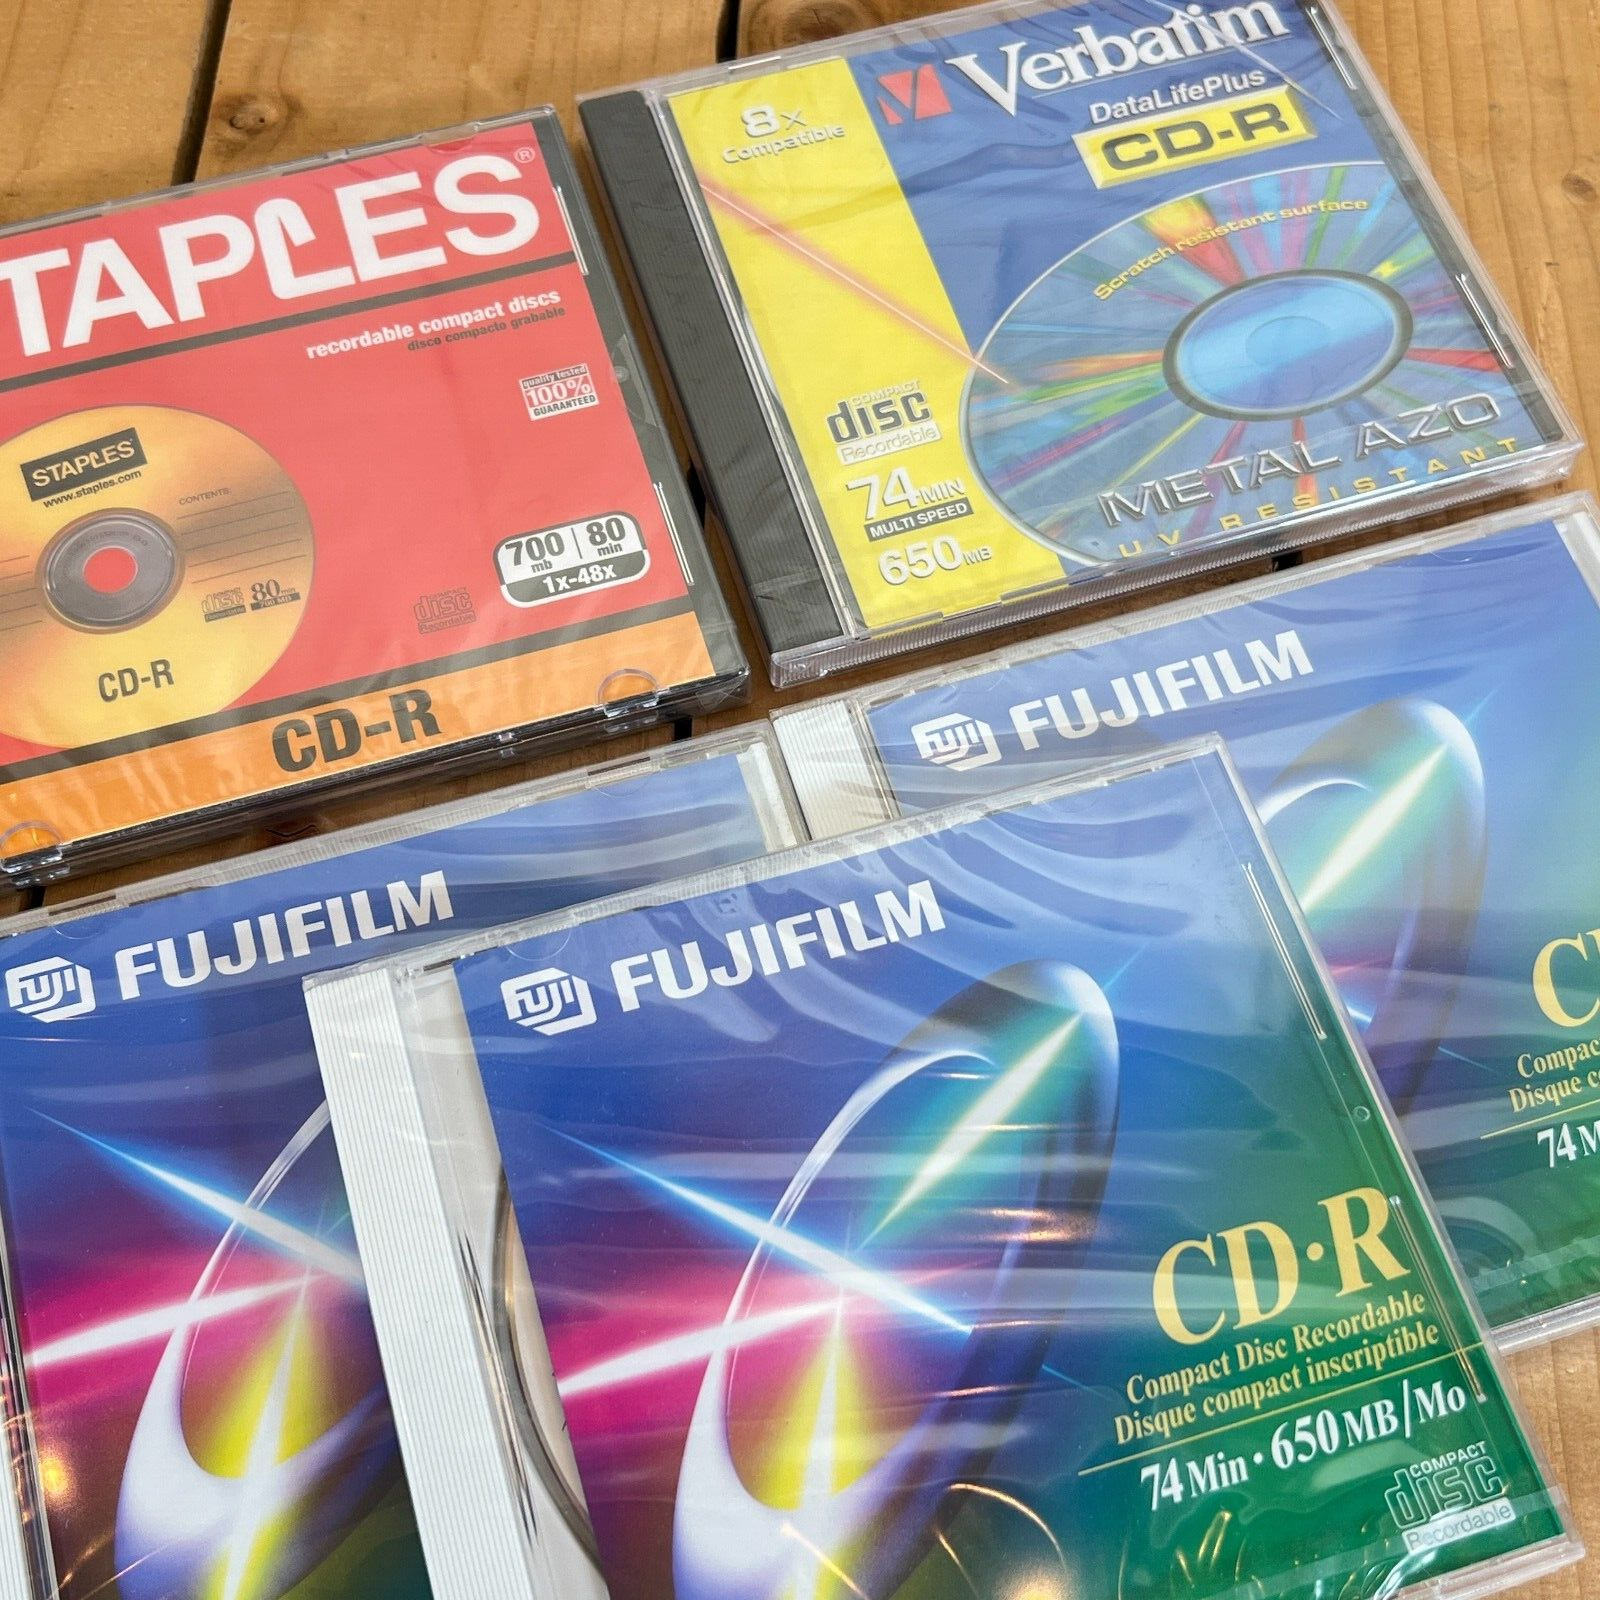 Mixed Lot of 5 Blank CD-R Discs - 3 FUJIFILM, 1 STAPLES, 1 Verbatim - NEW Sealed